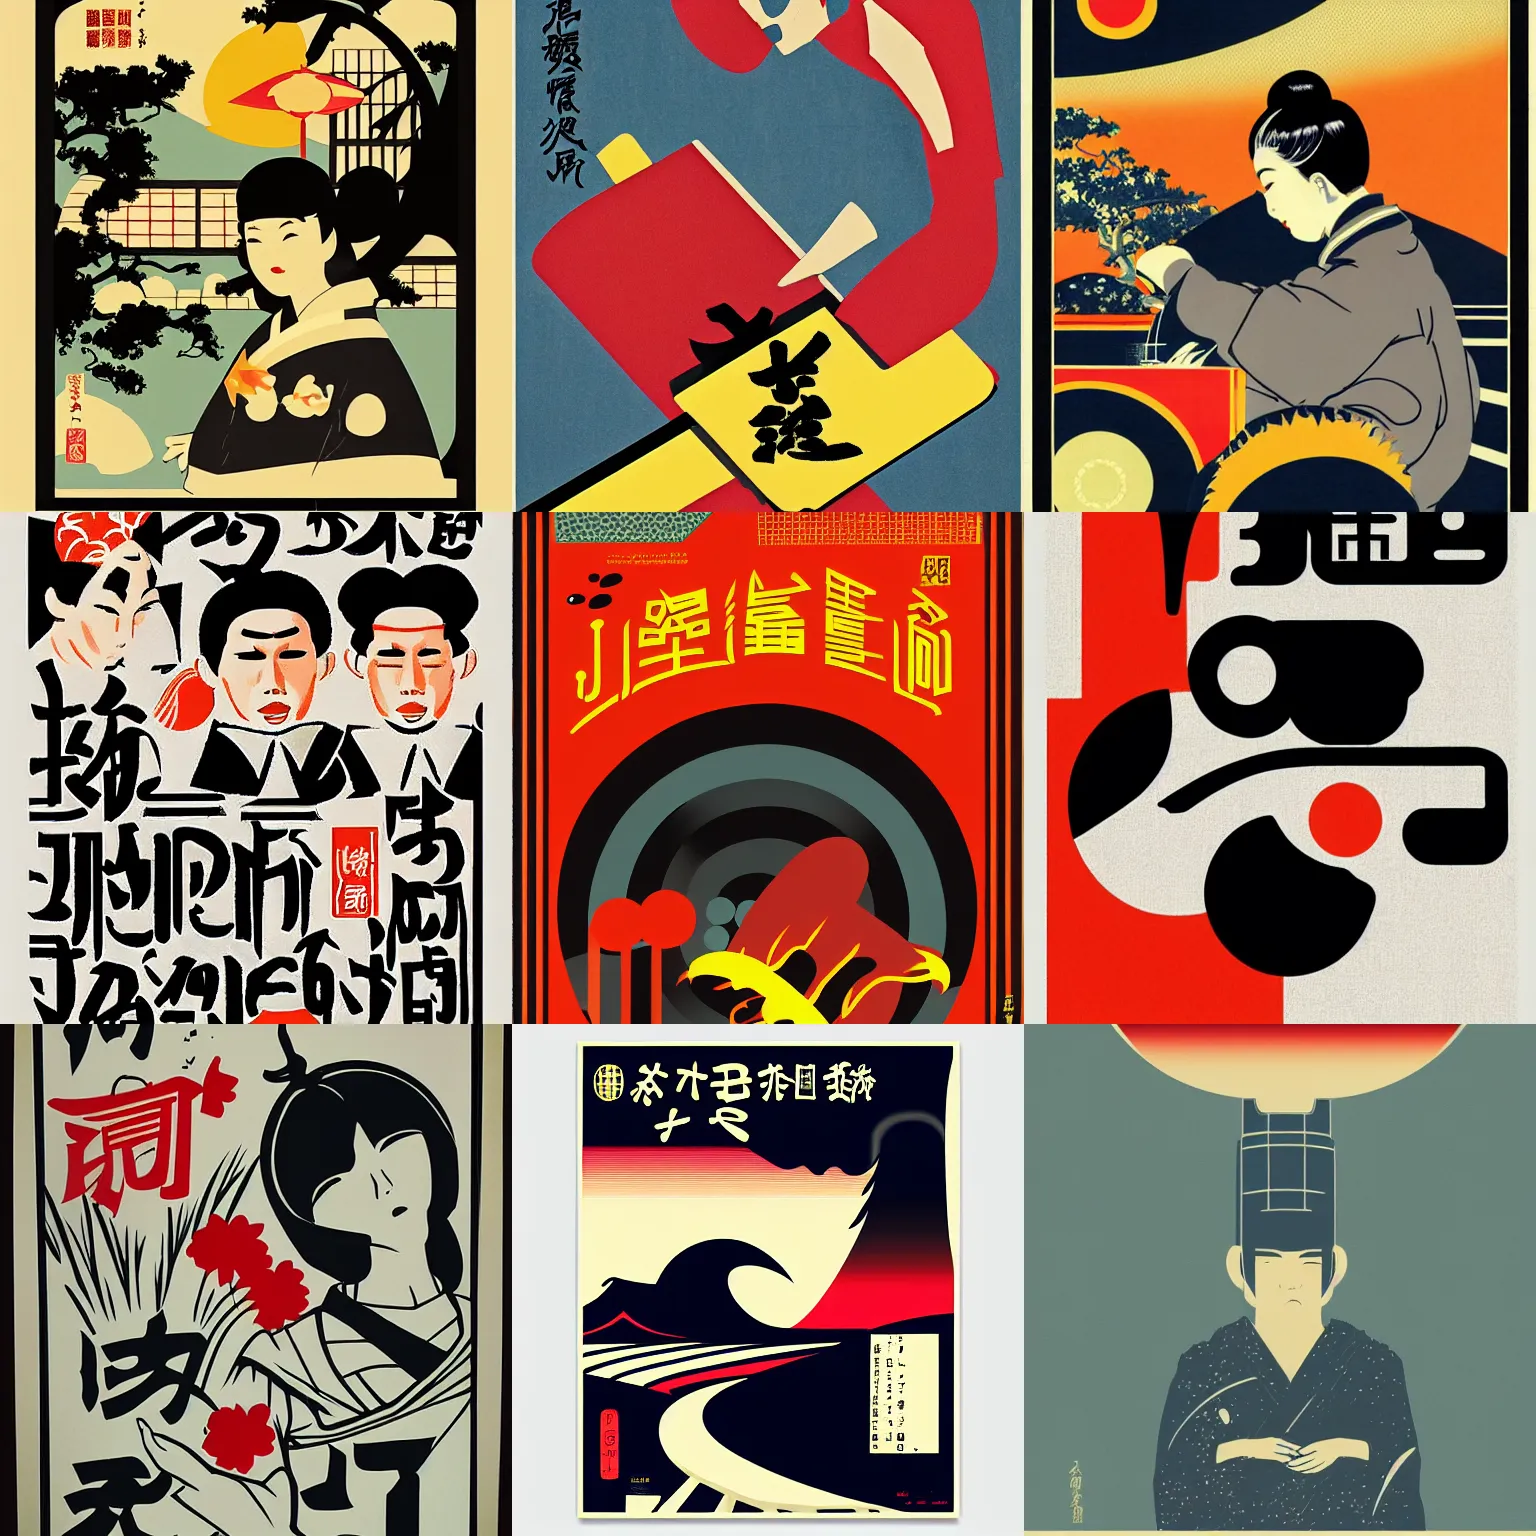 Prompt: retro japanese graphic poster